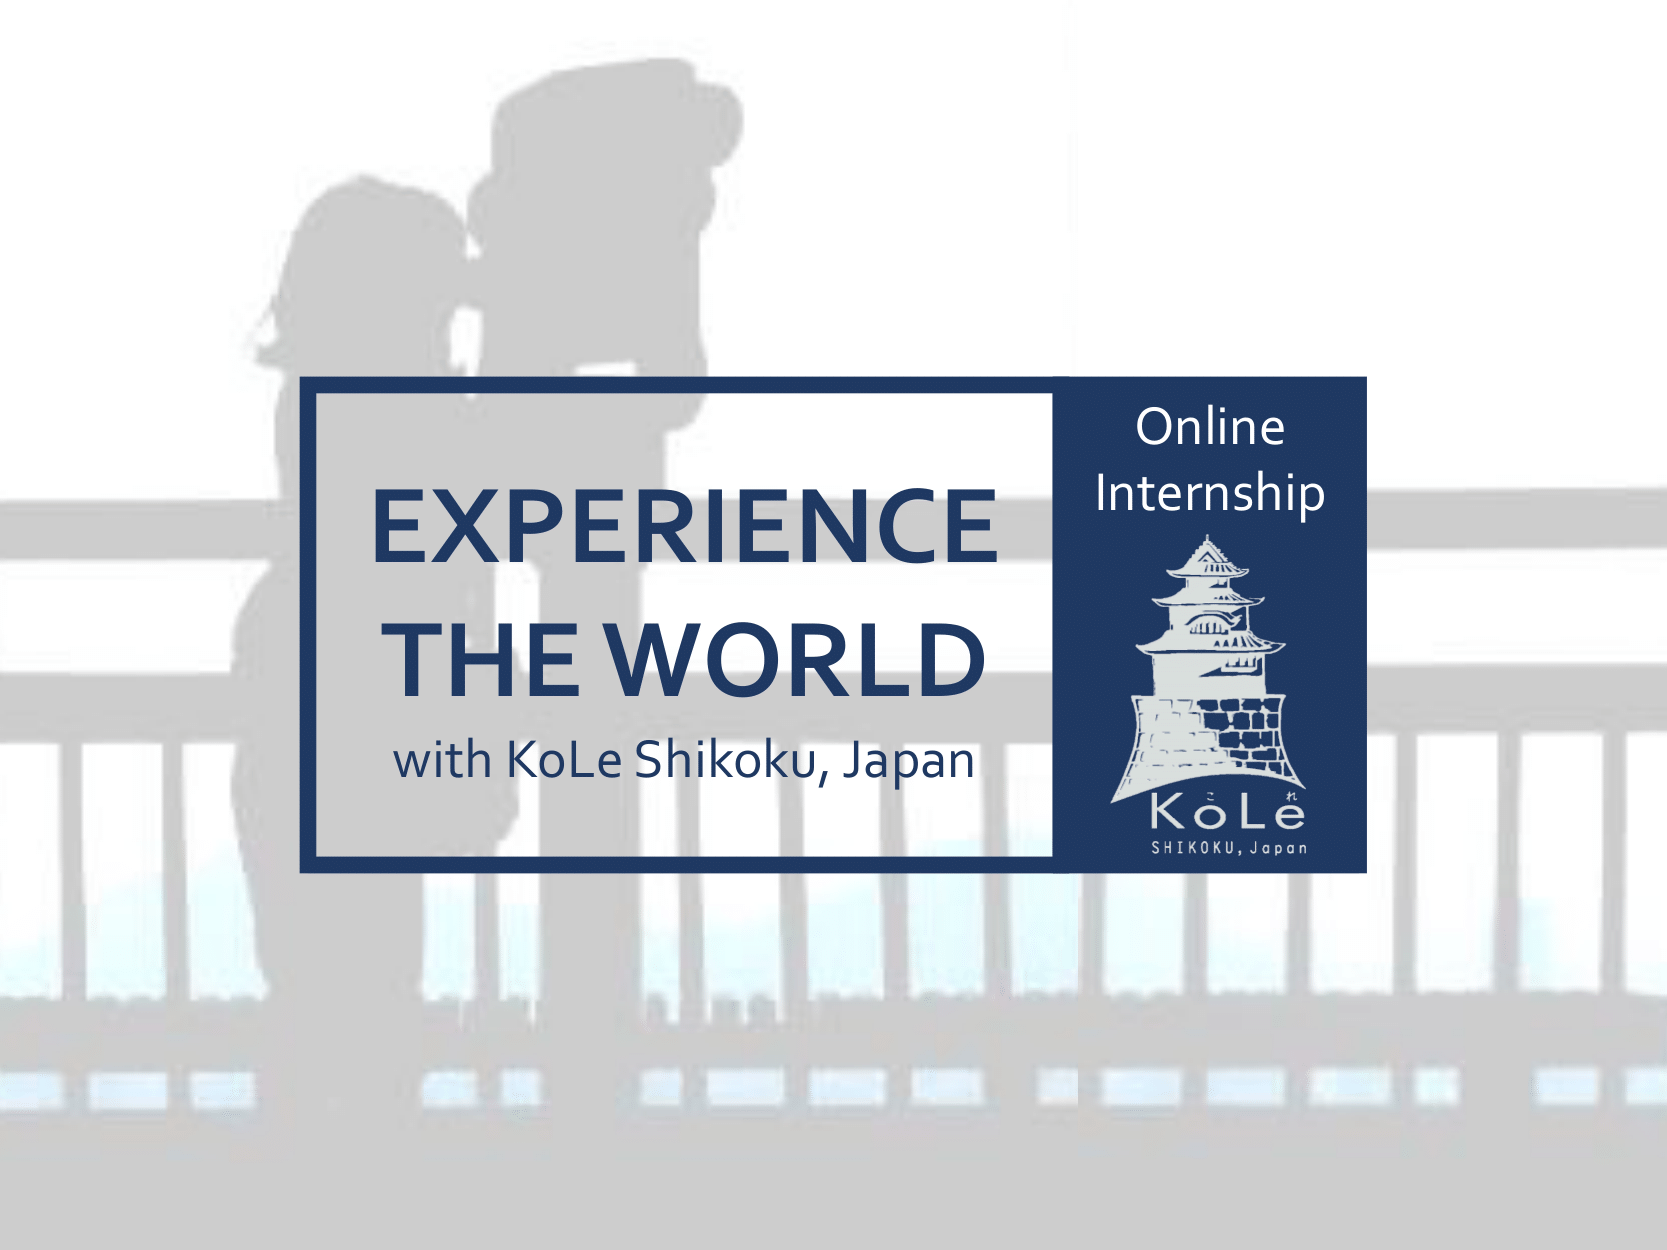 Online internship with KoLe by Pon&Con Inc. Virtual internship with Japanese company